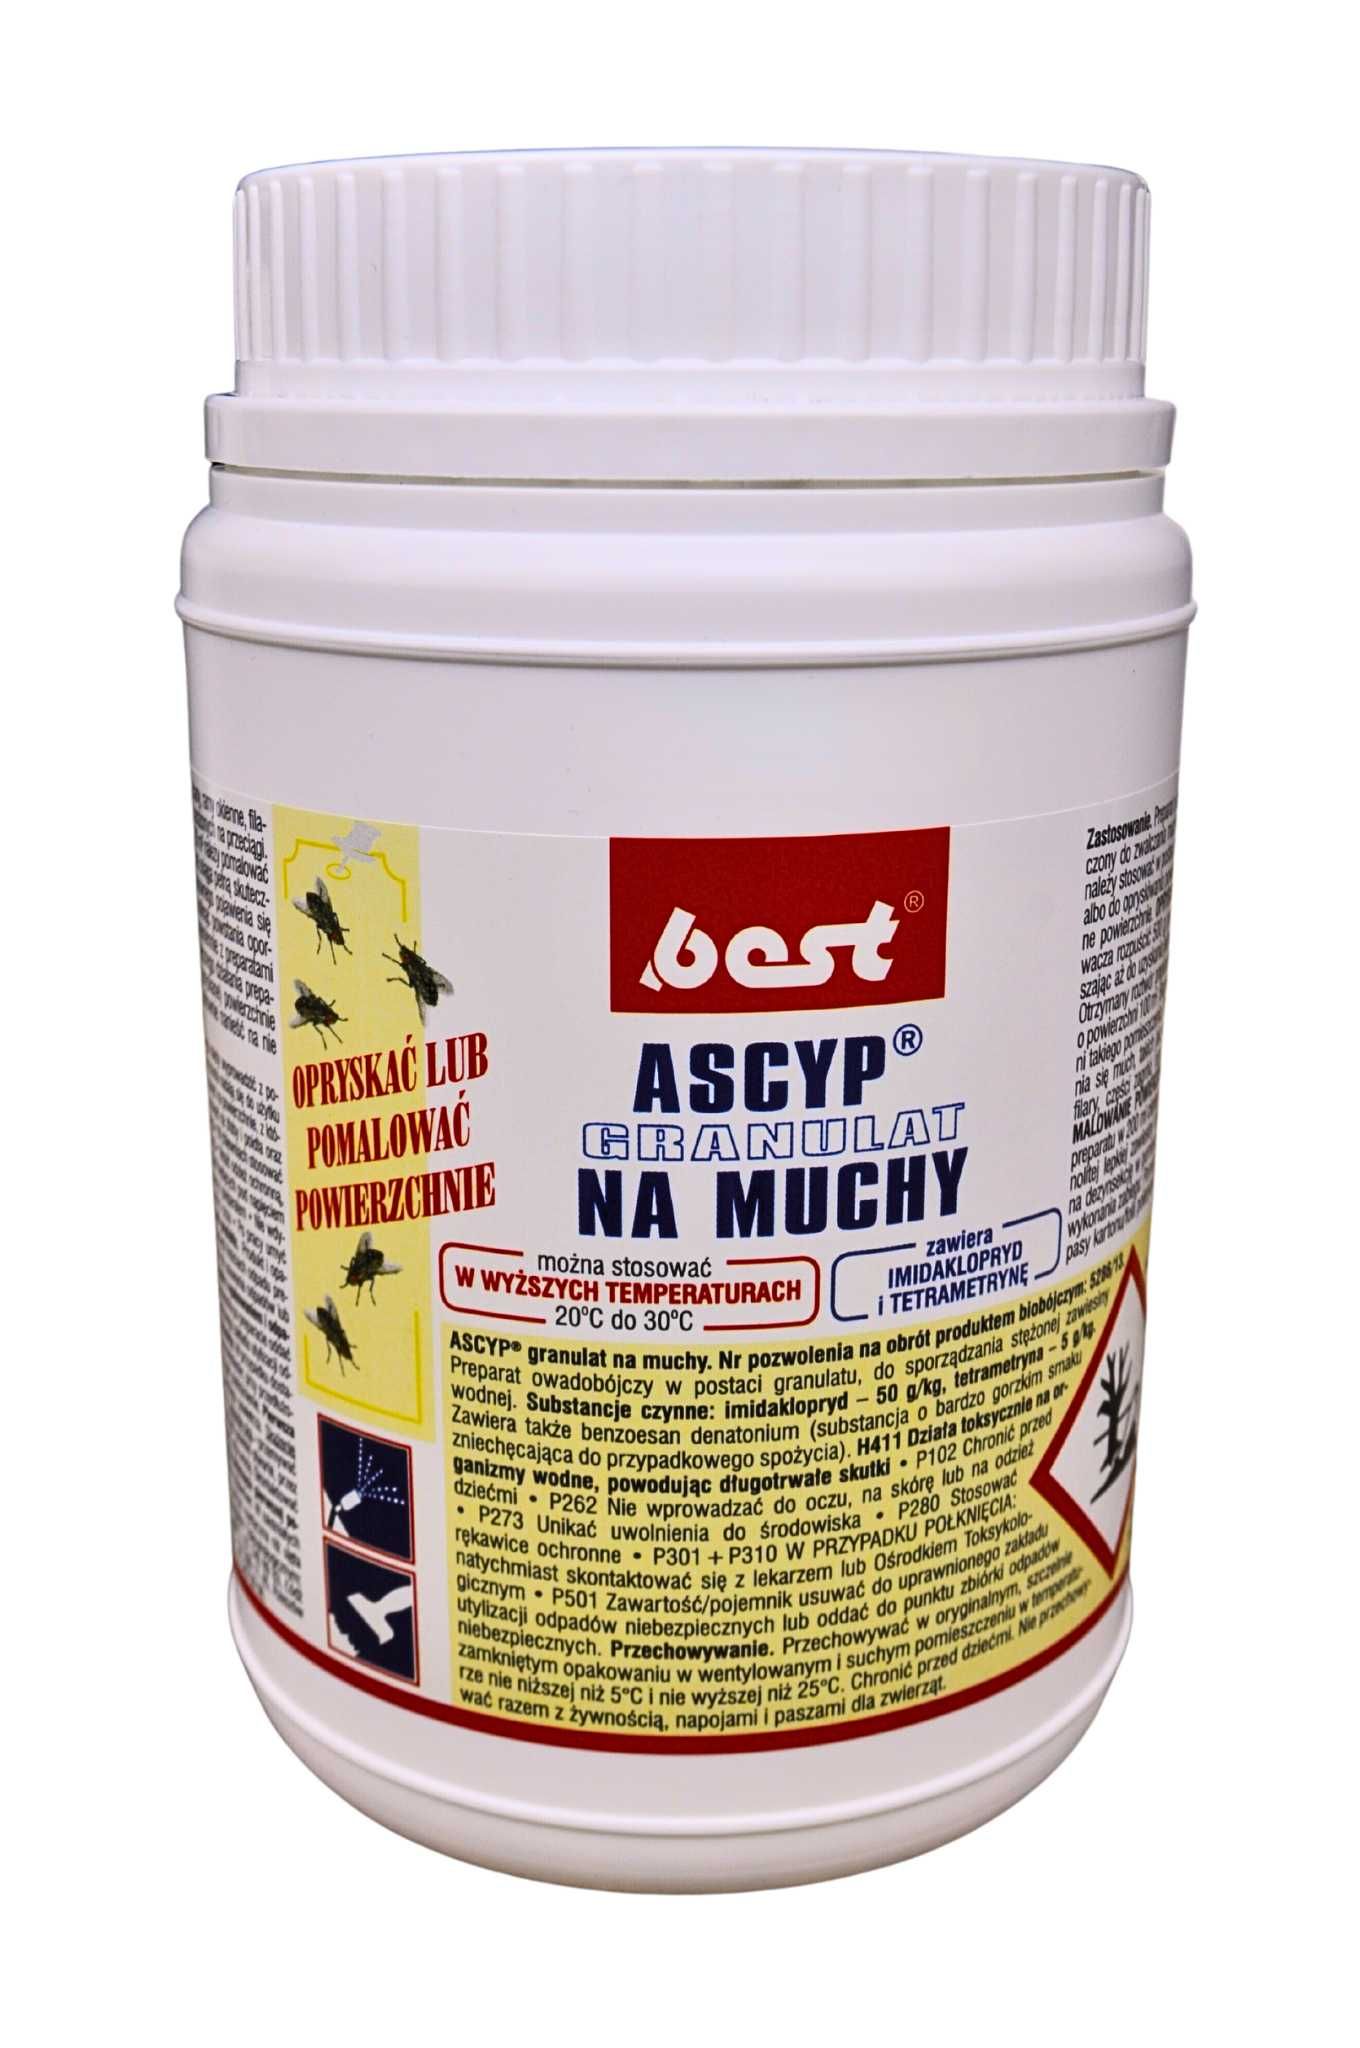 ASCYP 500g granulat na muchy, do malowania lub oprysku